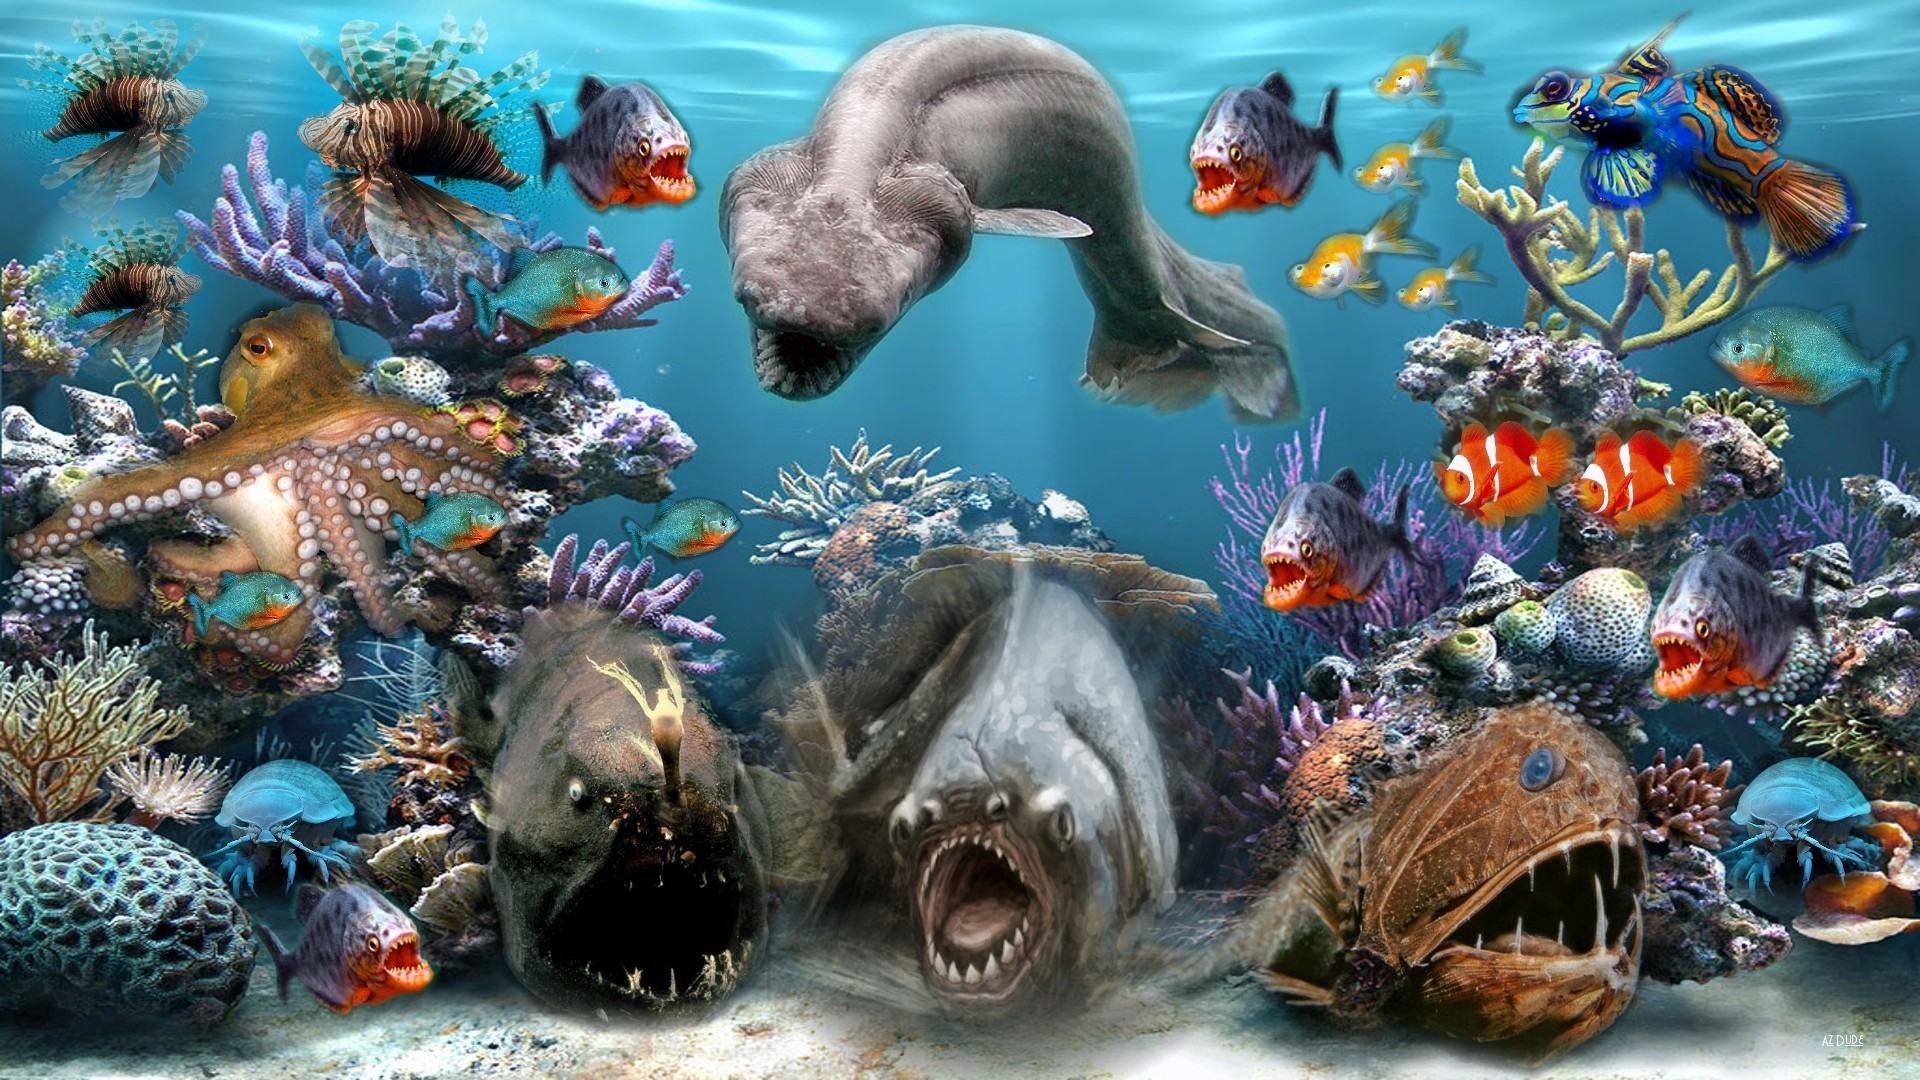 fond d'écran créature marine,biologie marine,sous marin,mammifère marin,poisson,poisson